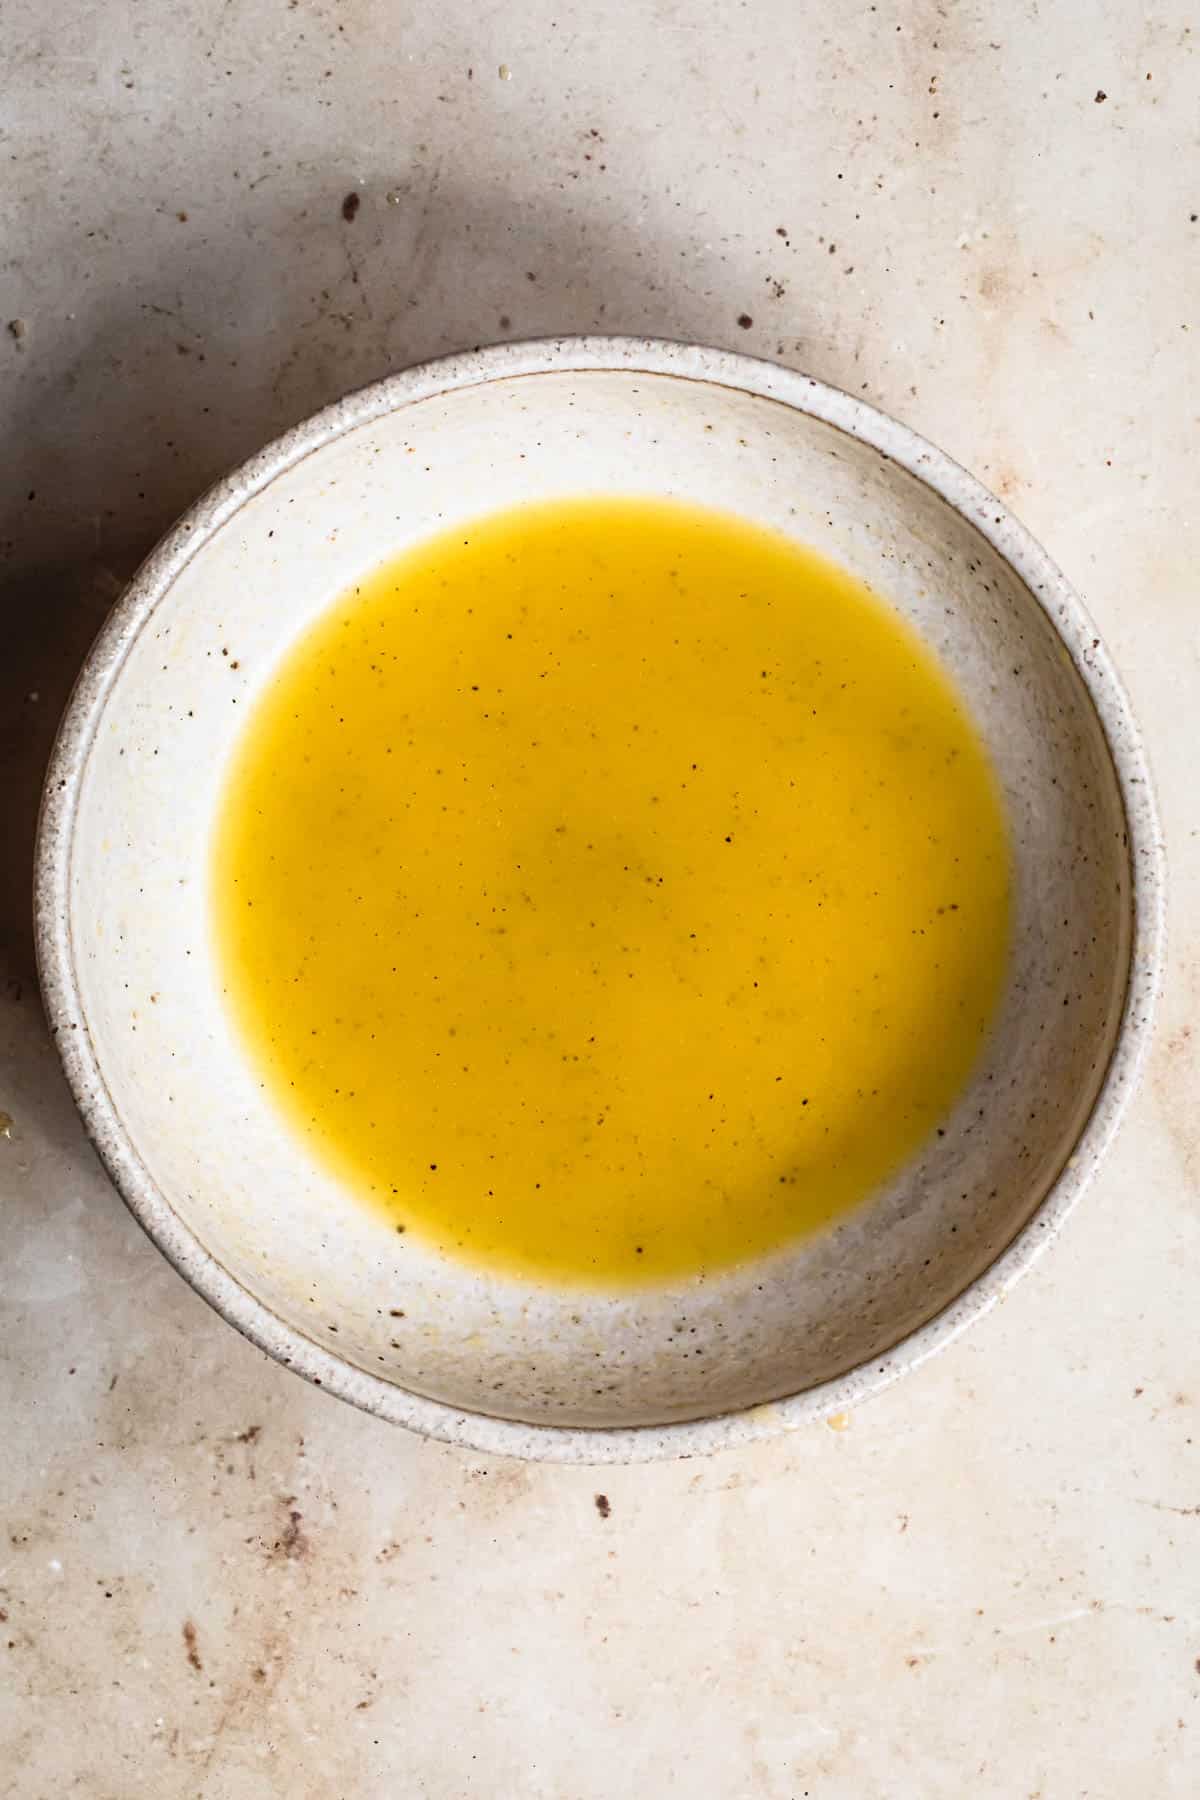 Lemon vinaigrette in a small bowl.